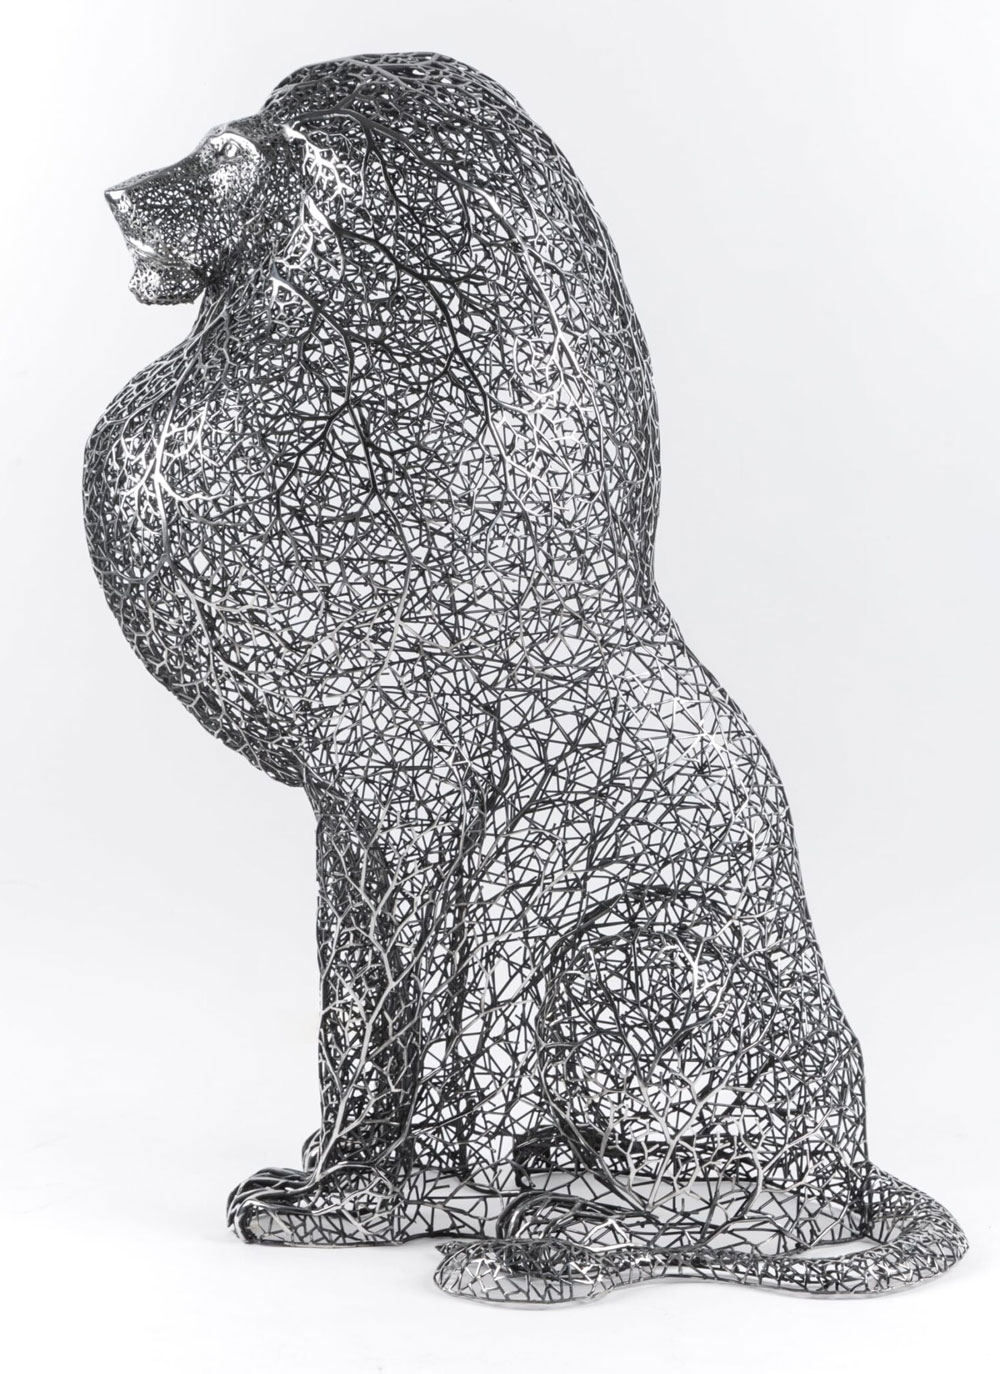 Кан Дон Хён (Kang Dong Hyun) - скульптура.